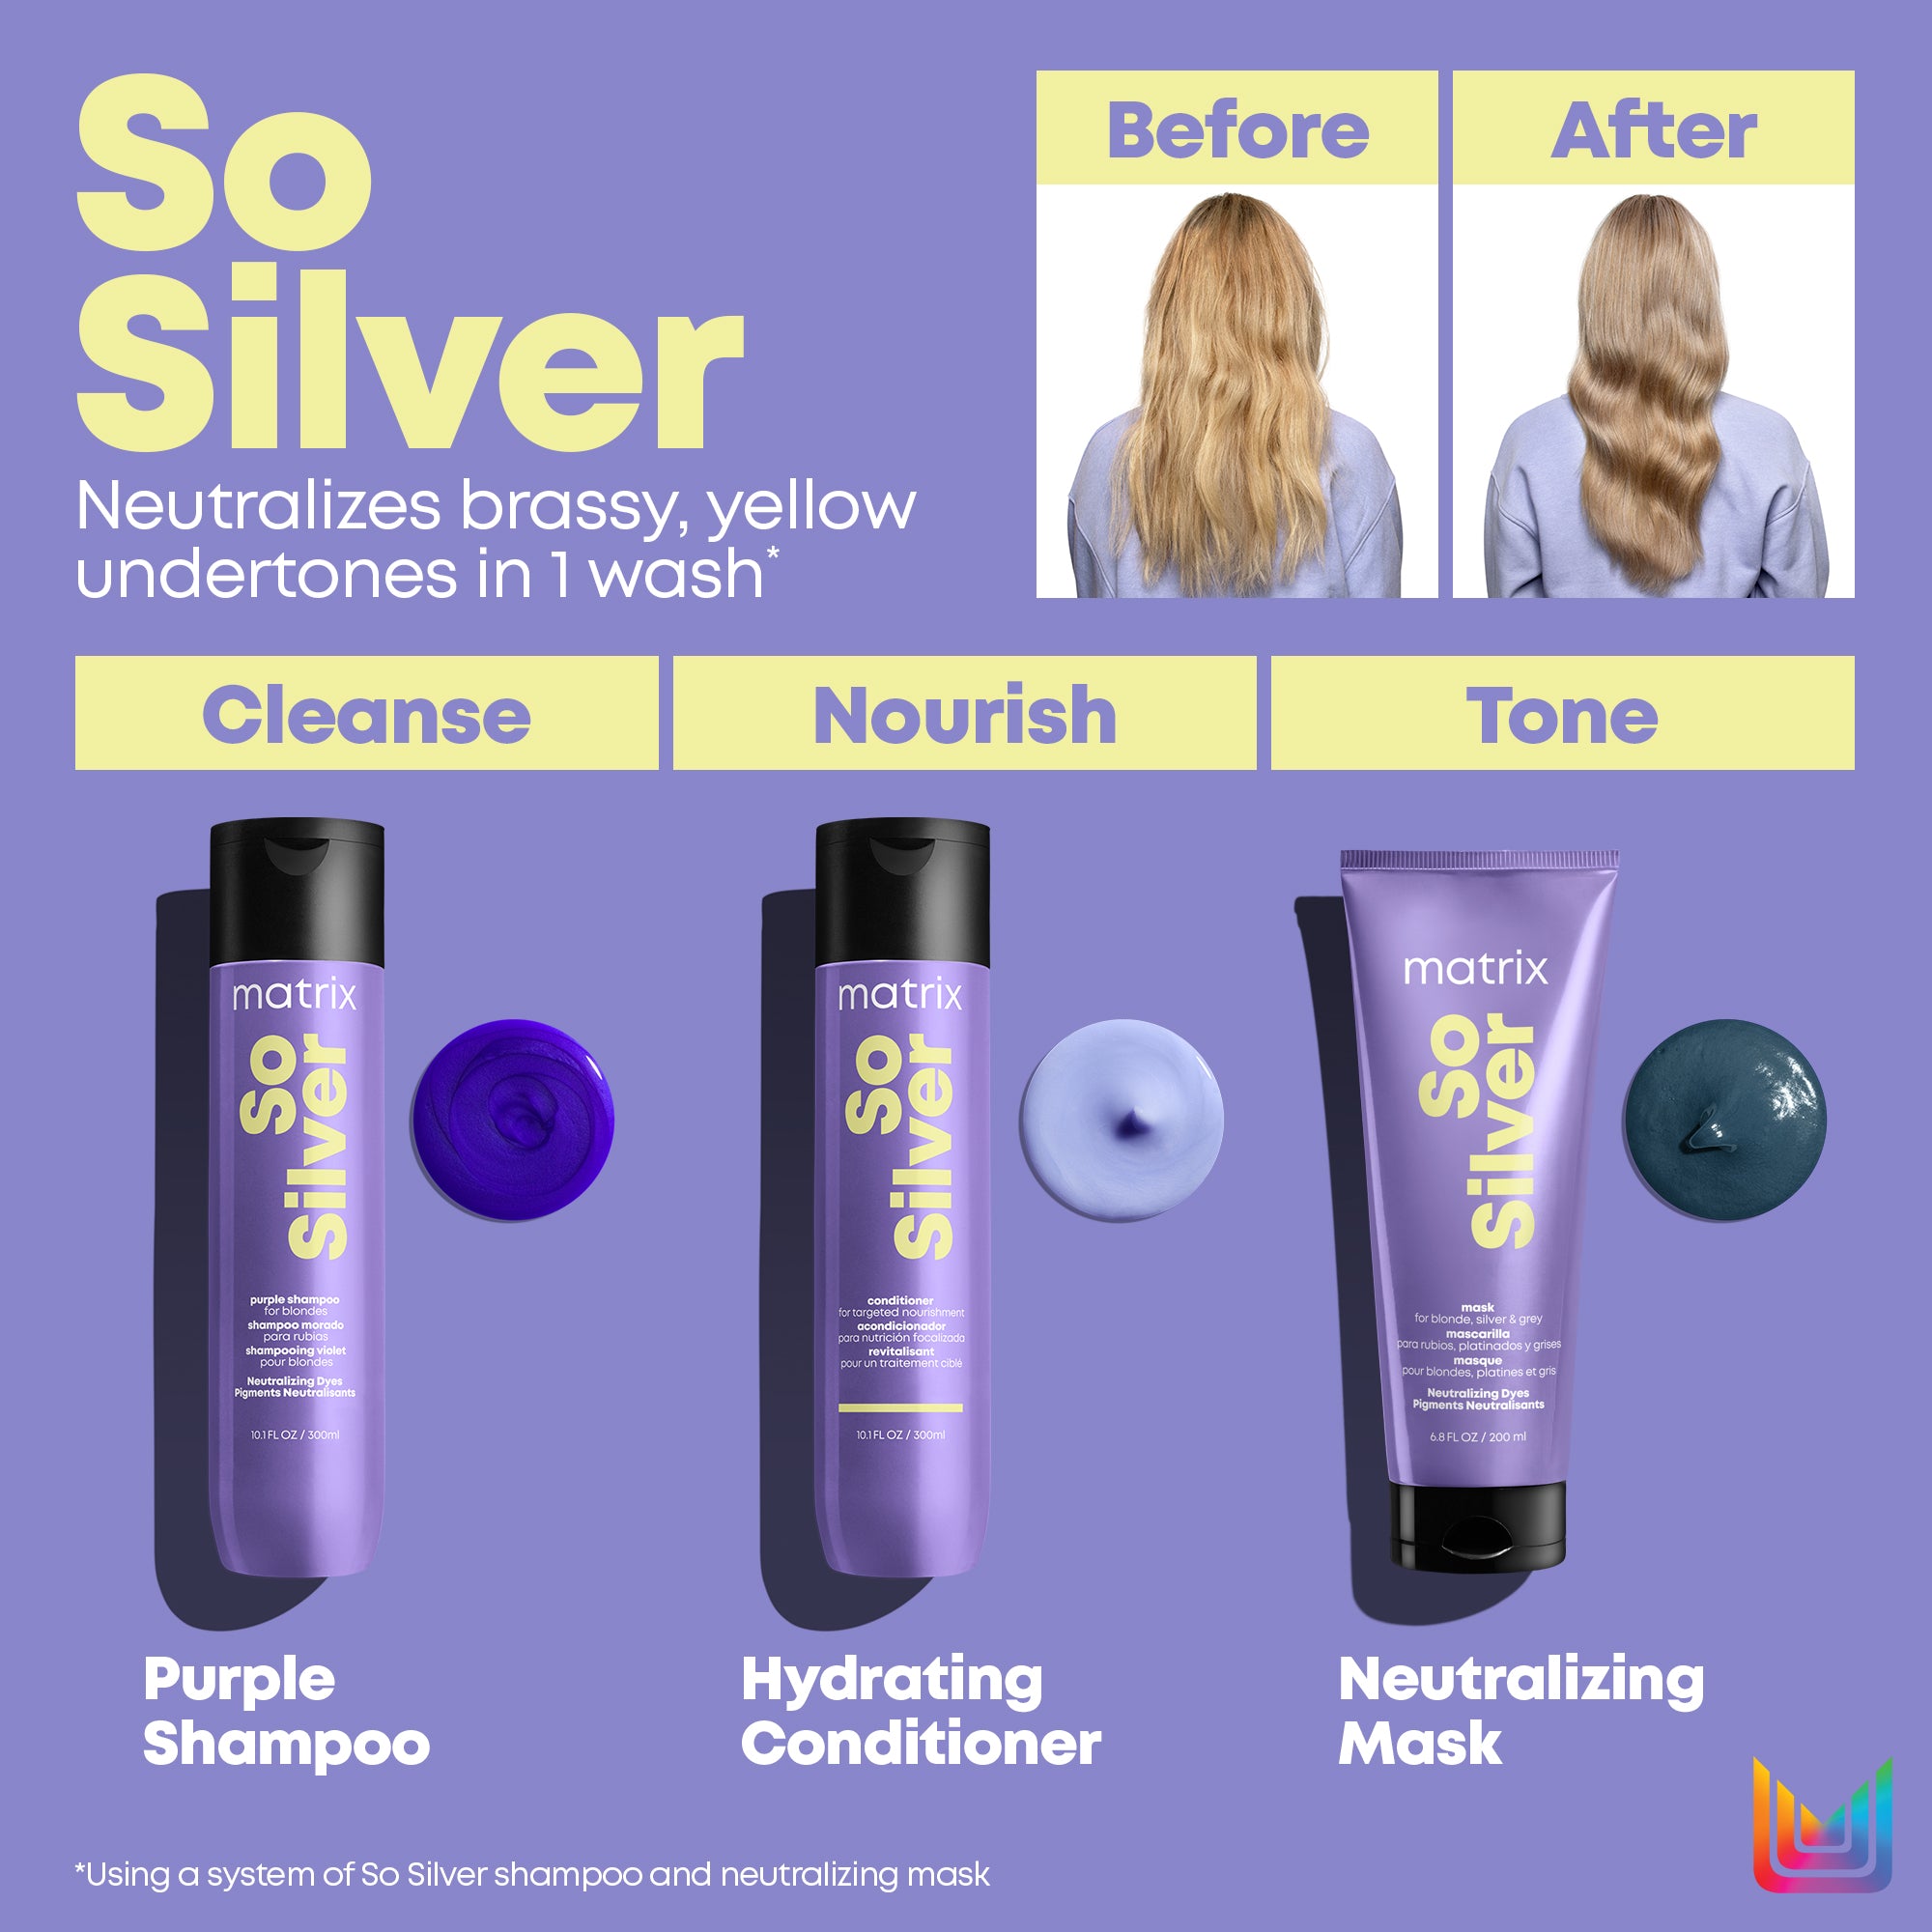 Matrix So Silver Shampoo / 10 OZ